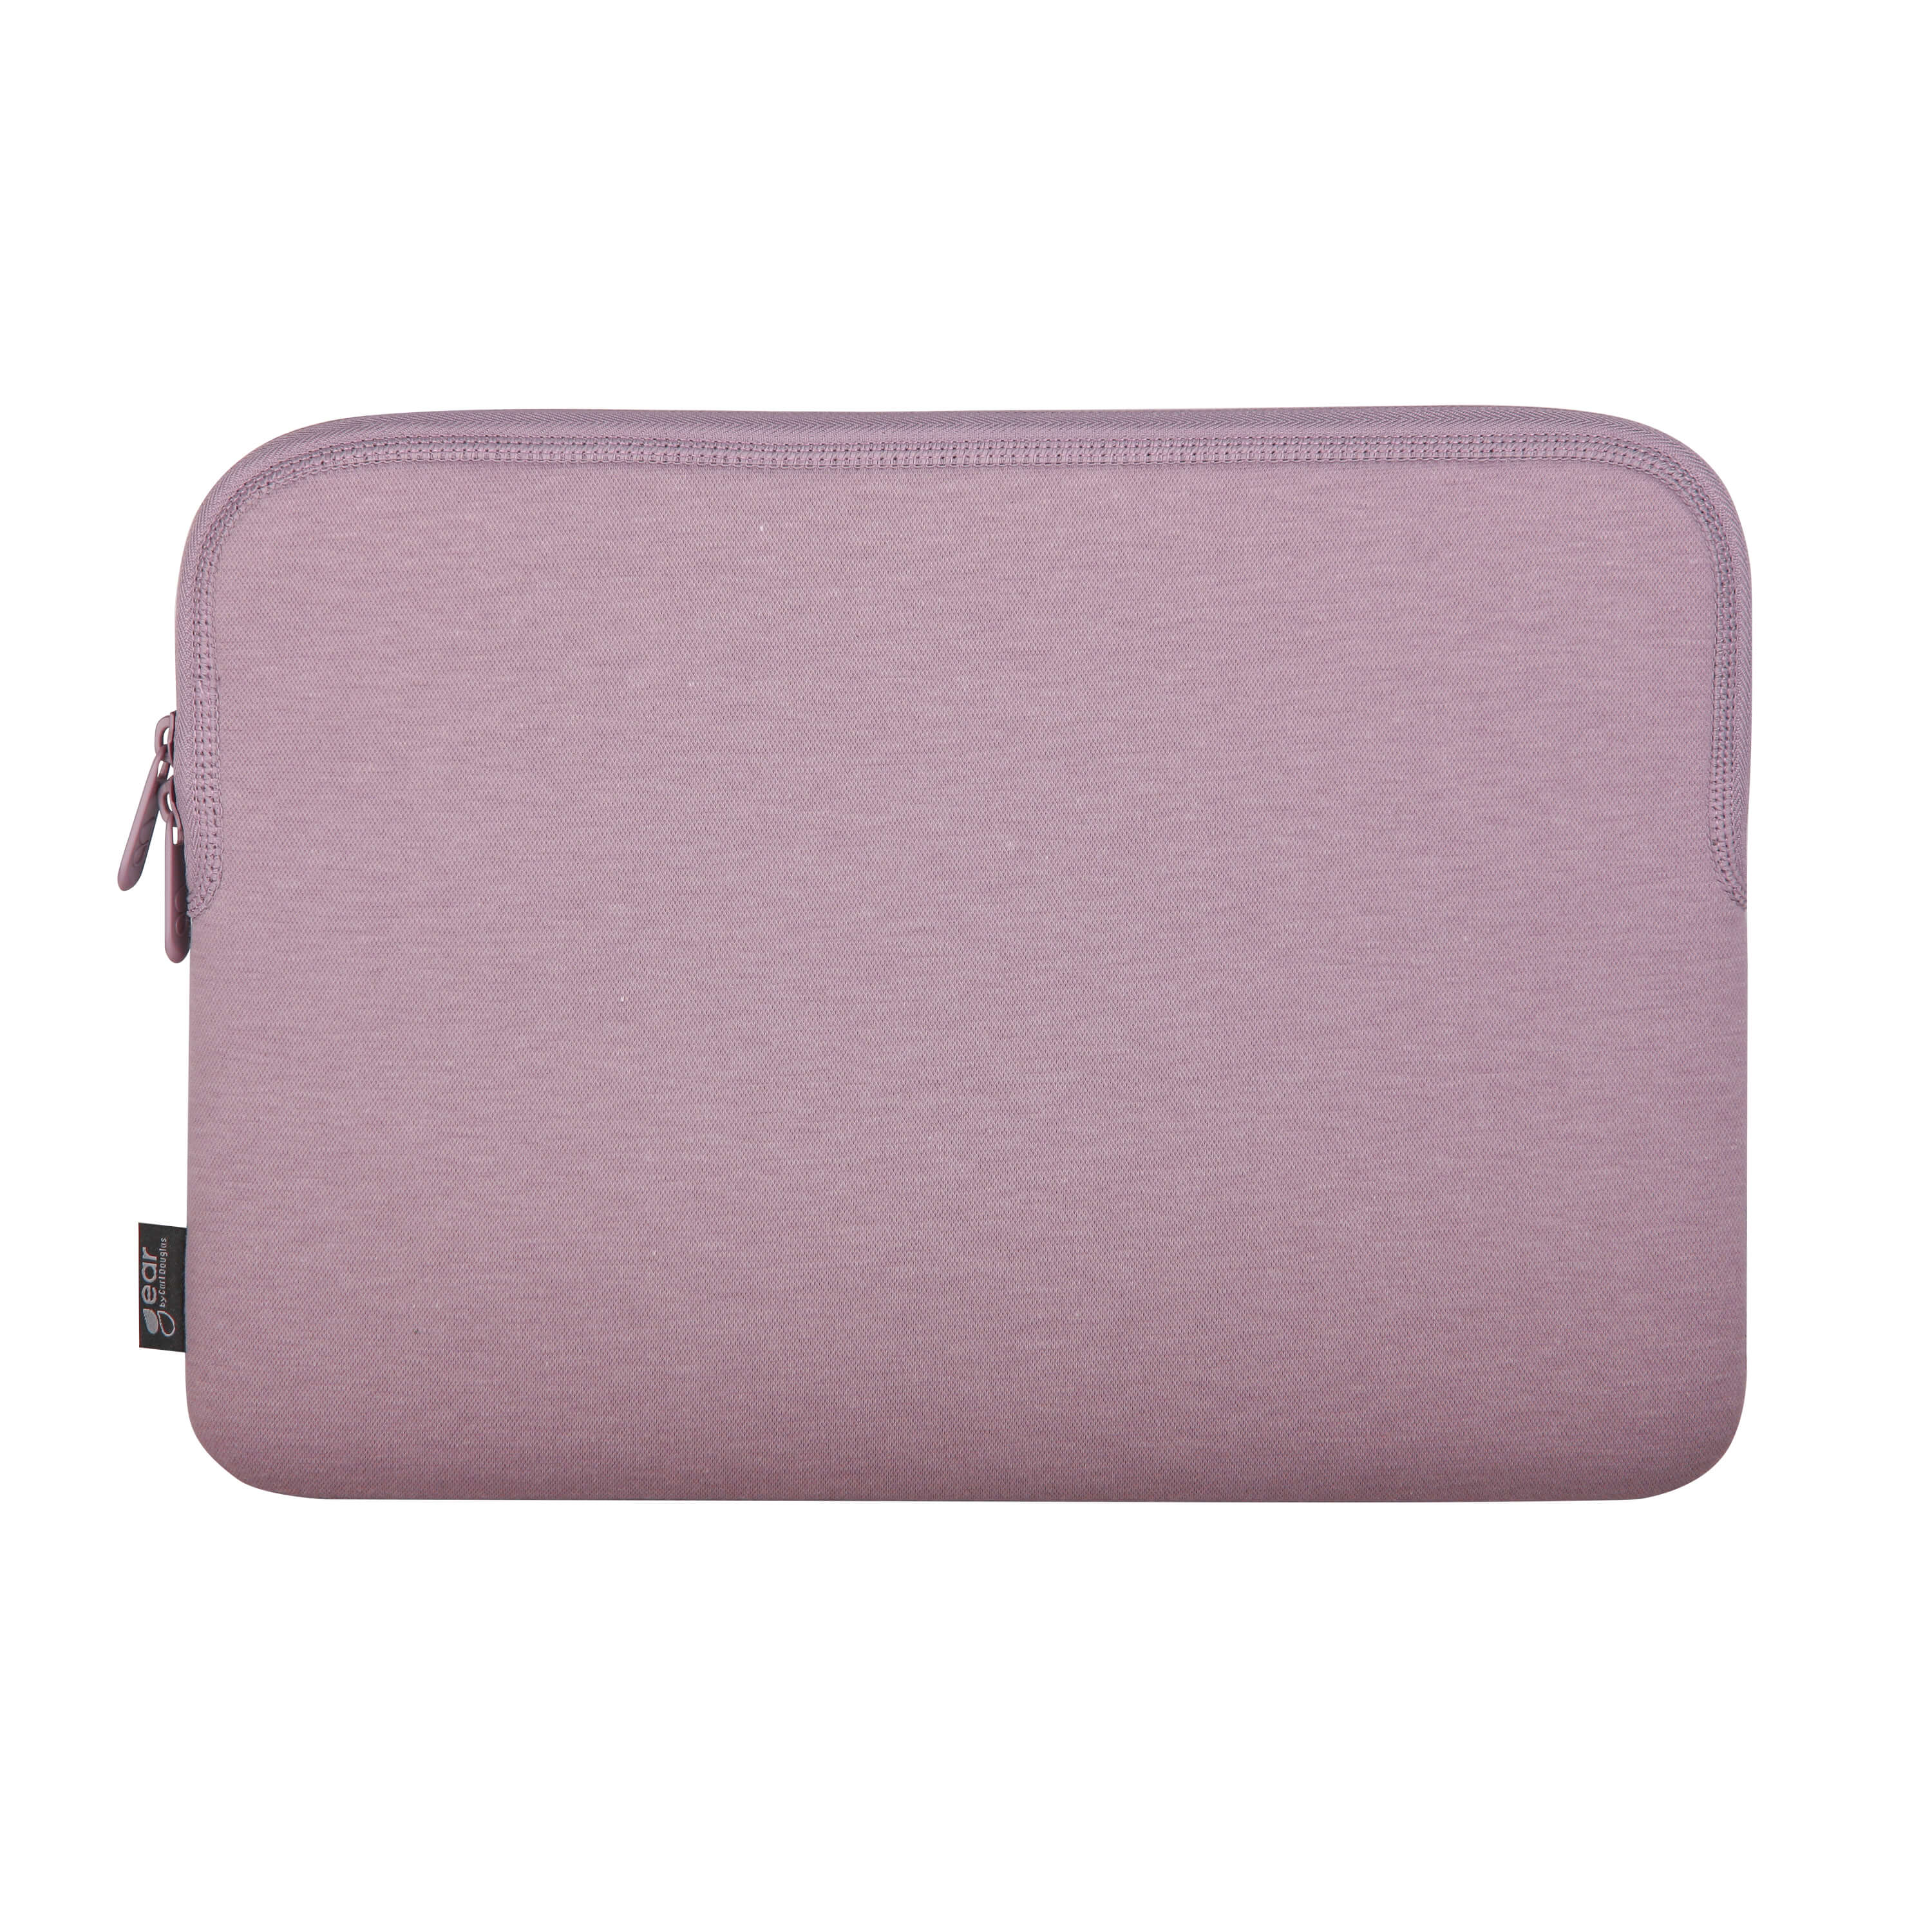 Laptop-Tasche Ärmel Universal Polyester, Rosa ONSALA \